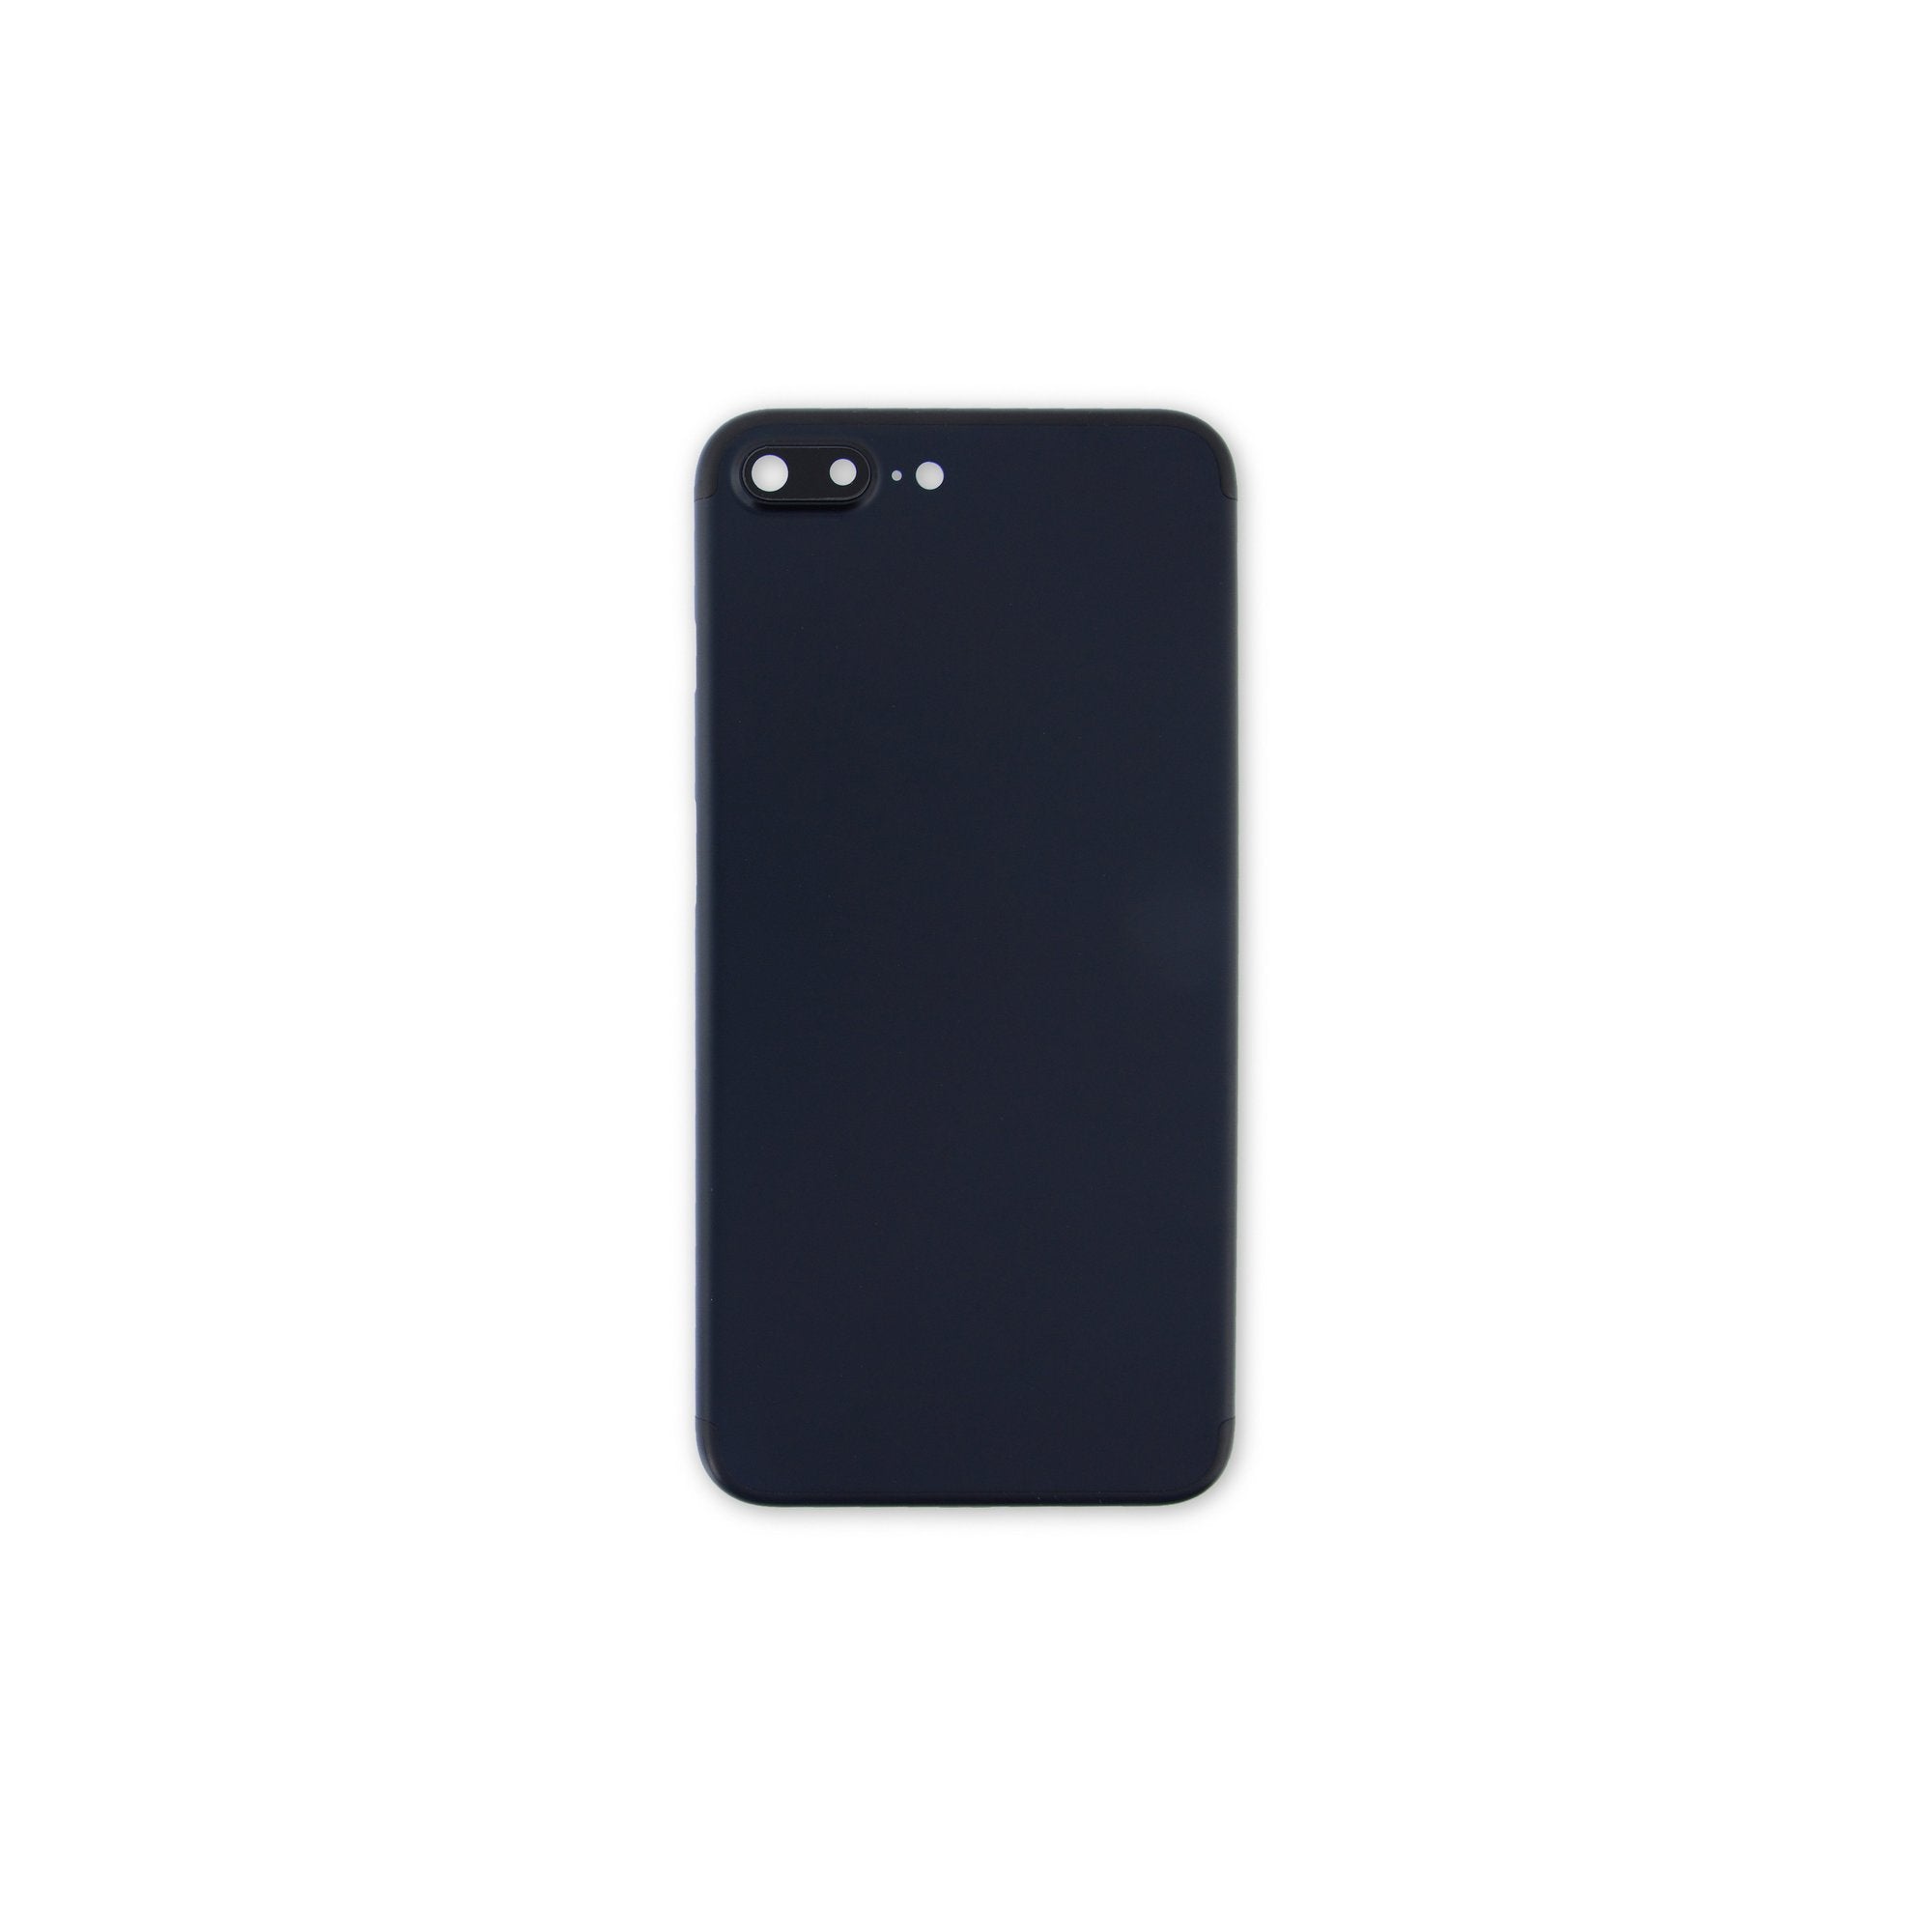 iPhone 7 Plus Blank Rear Case Black New